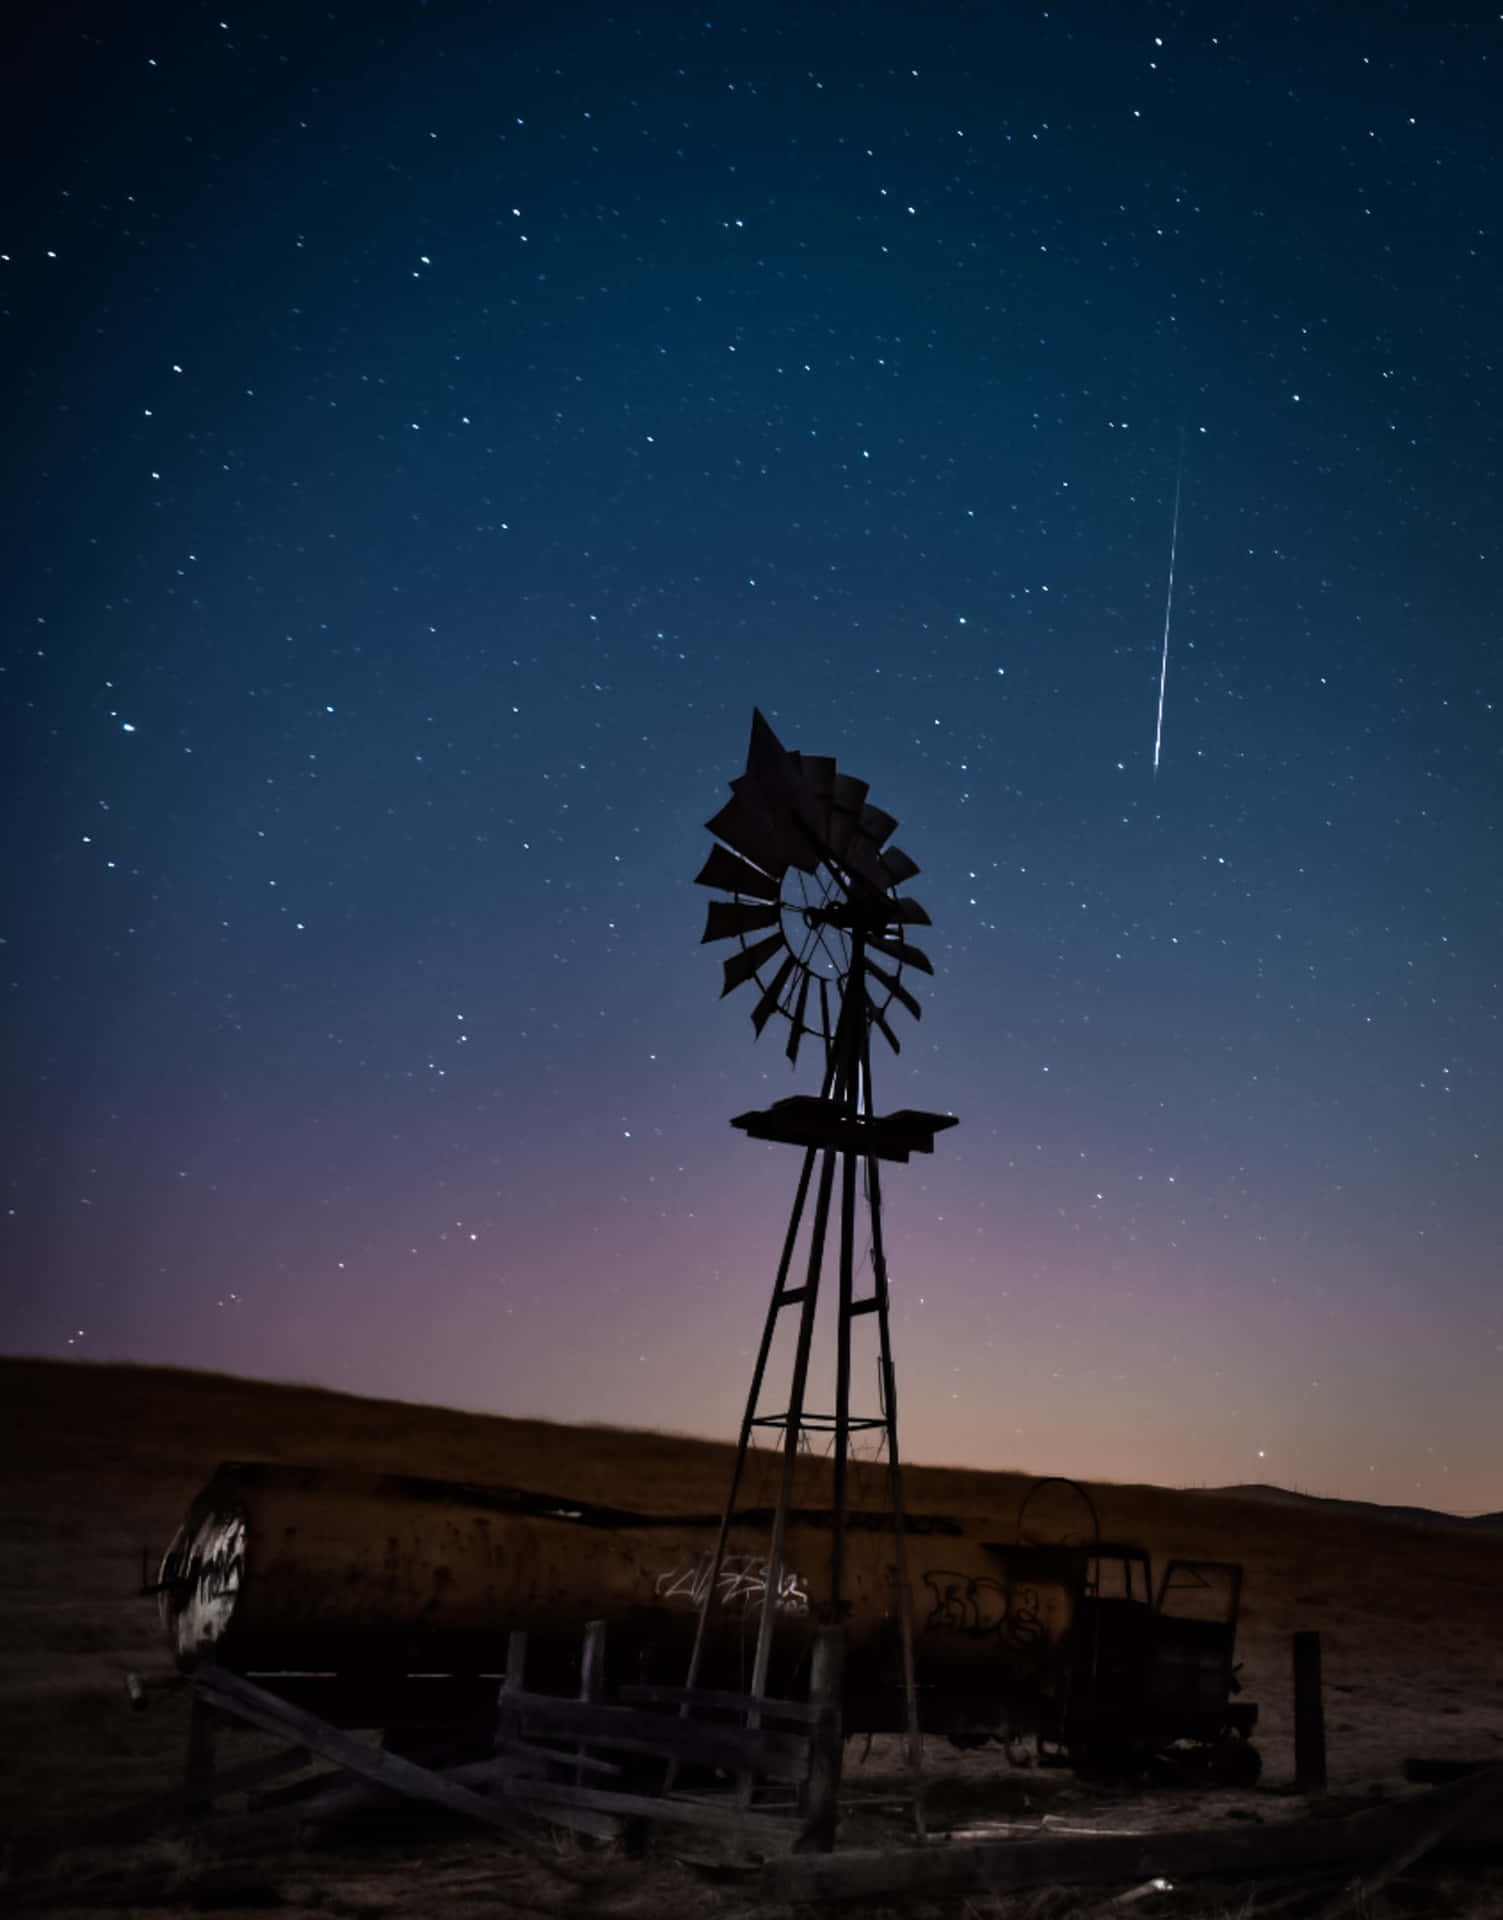 Stunning Meteor Shower in the Night Sky Wallpaper